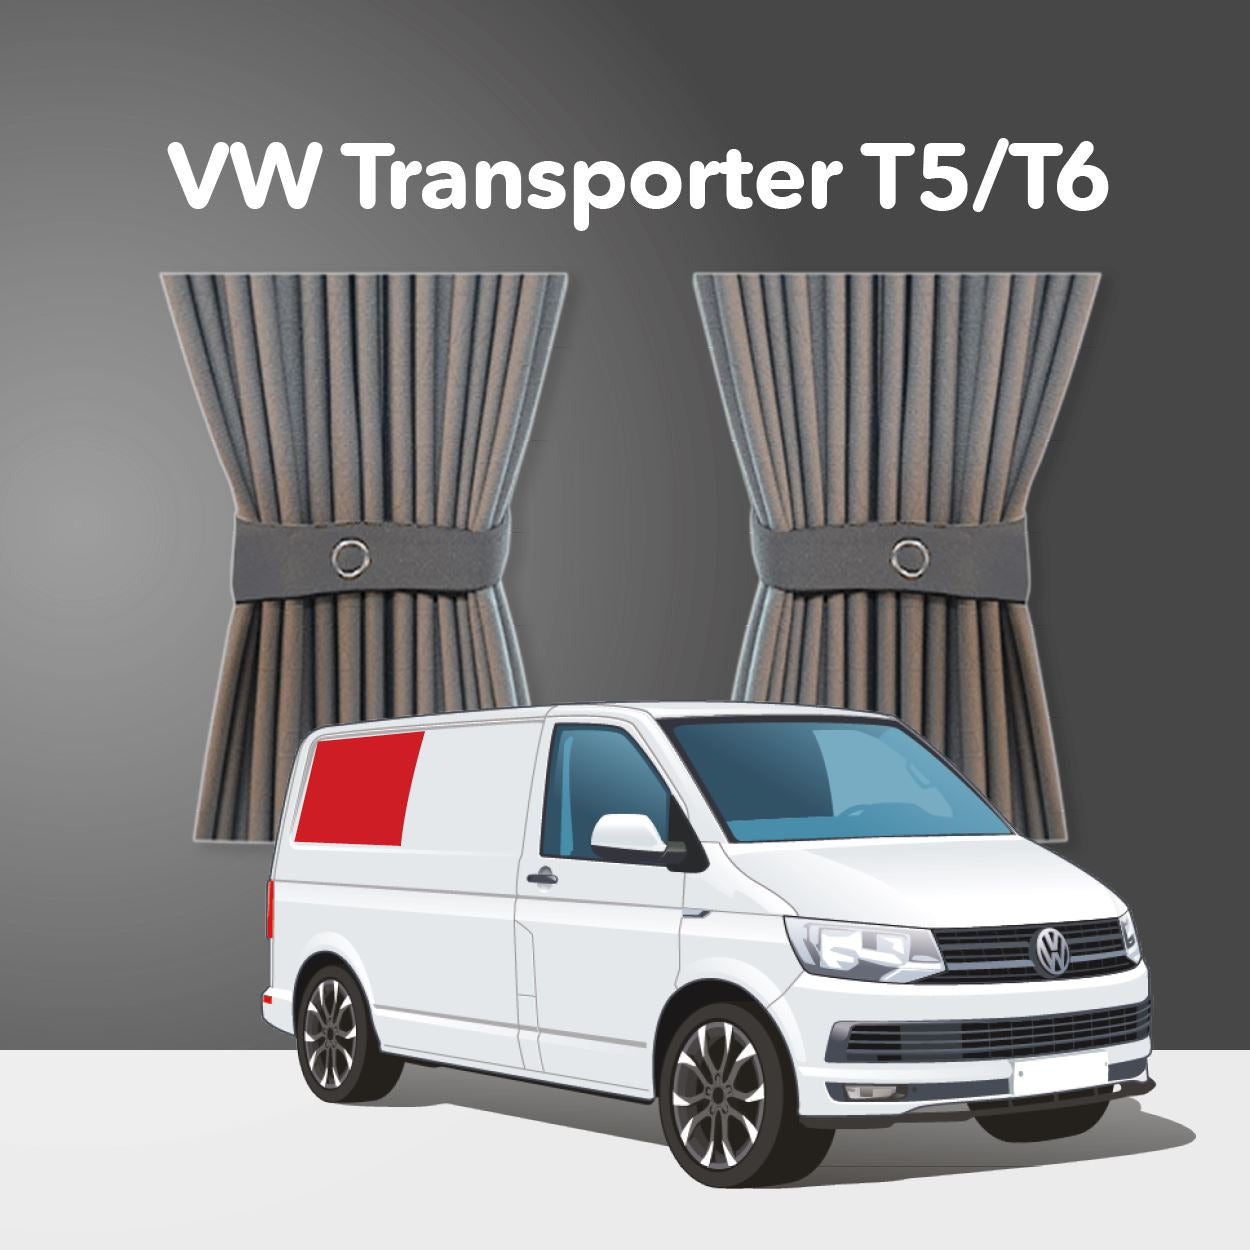 Volkswagen Transporter T5 long term review - Fleet News, vw t5 